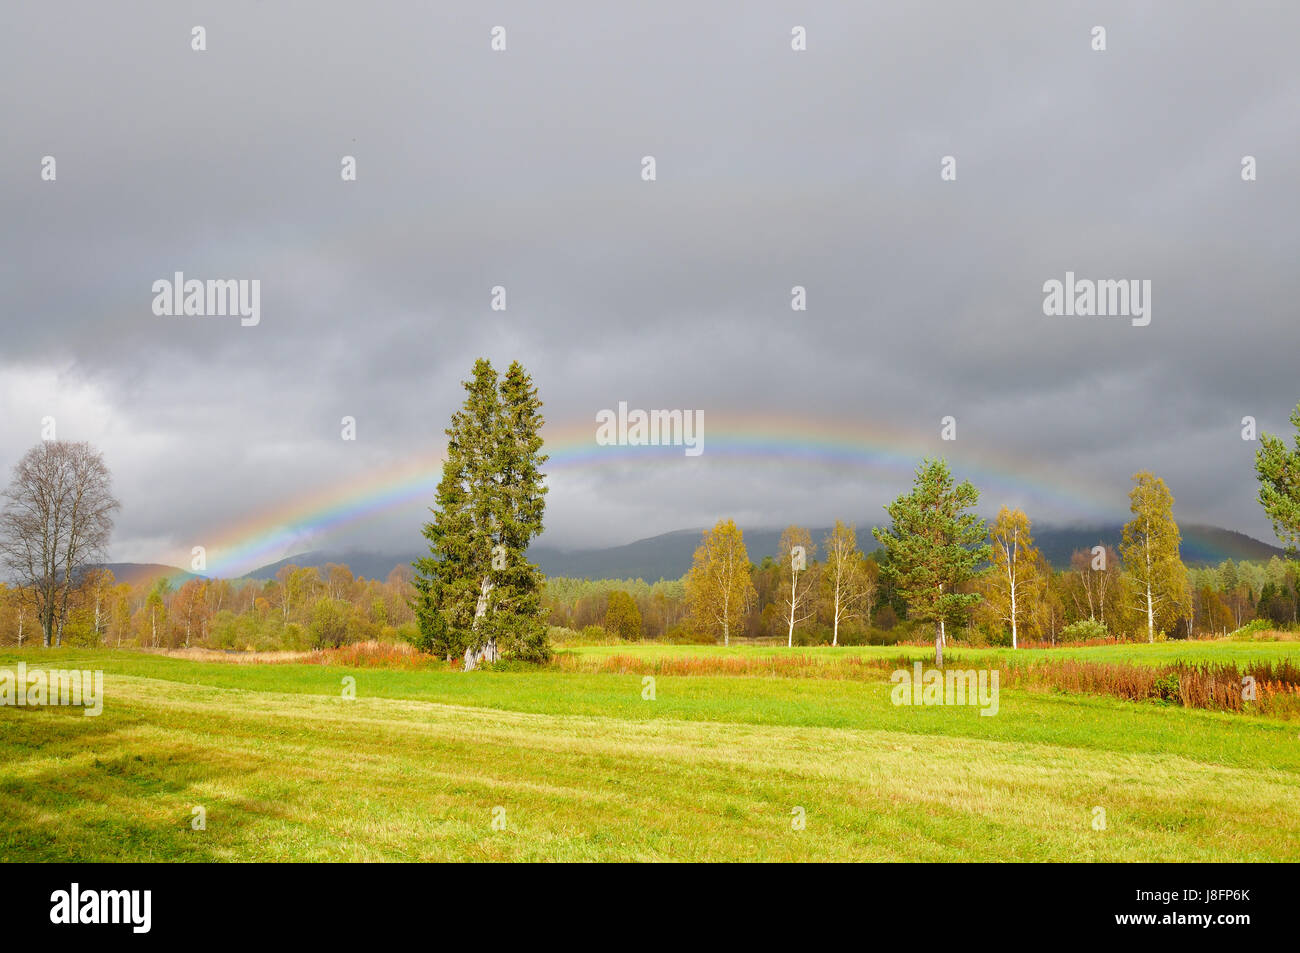 norway, rainbow, scenery, countryside, nature, fall, autumn, tree, trees, Stock Photo